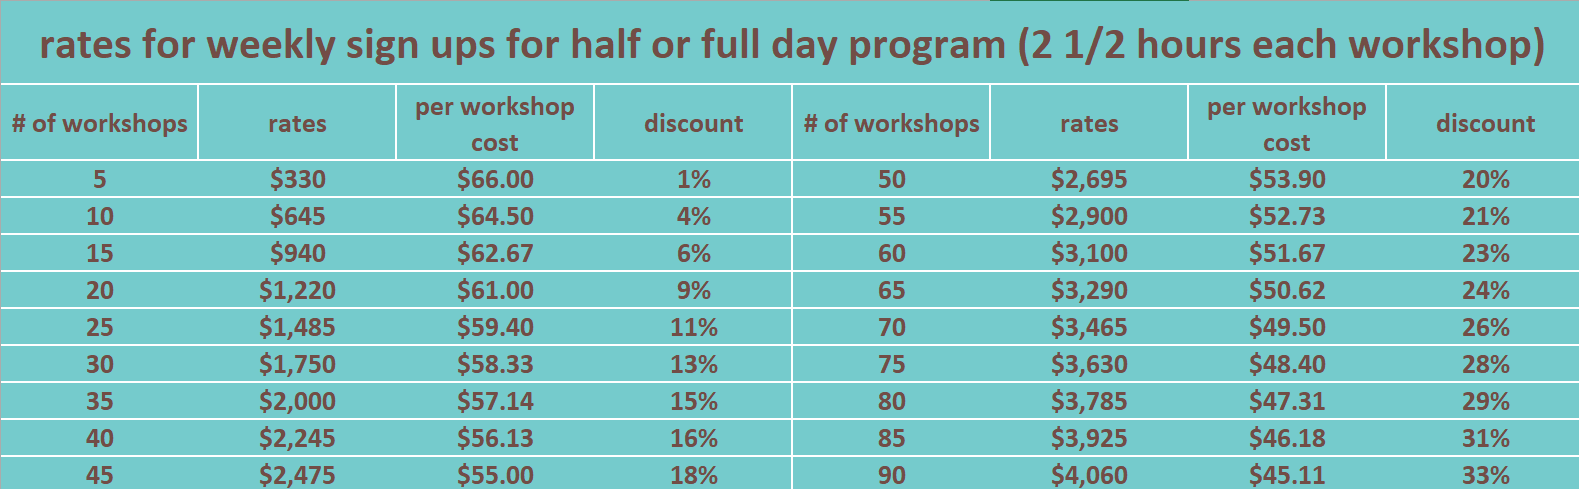 summer art workshop rates for weekly sign ups